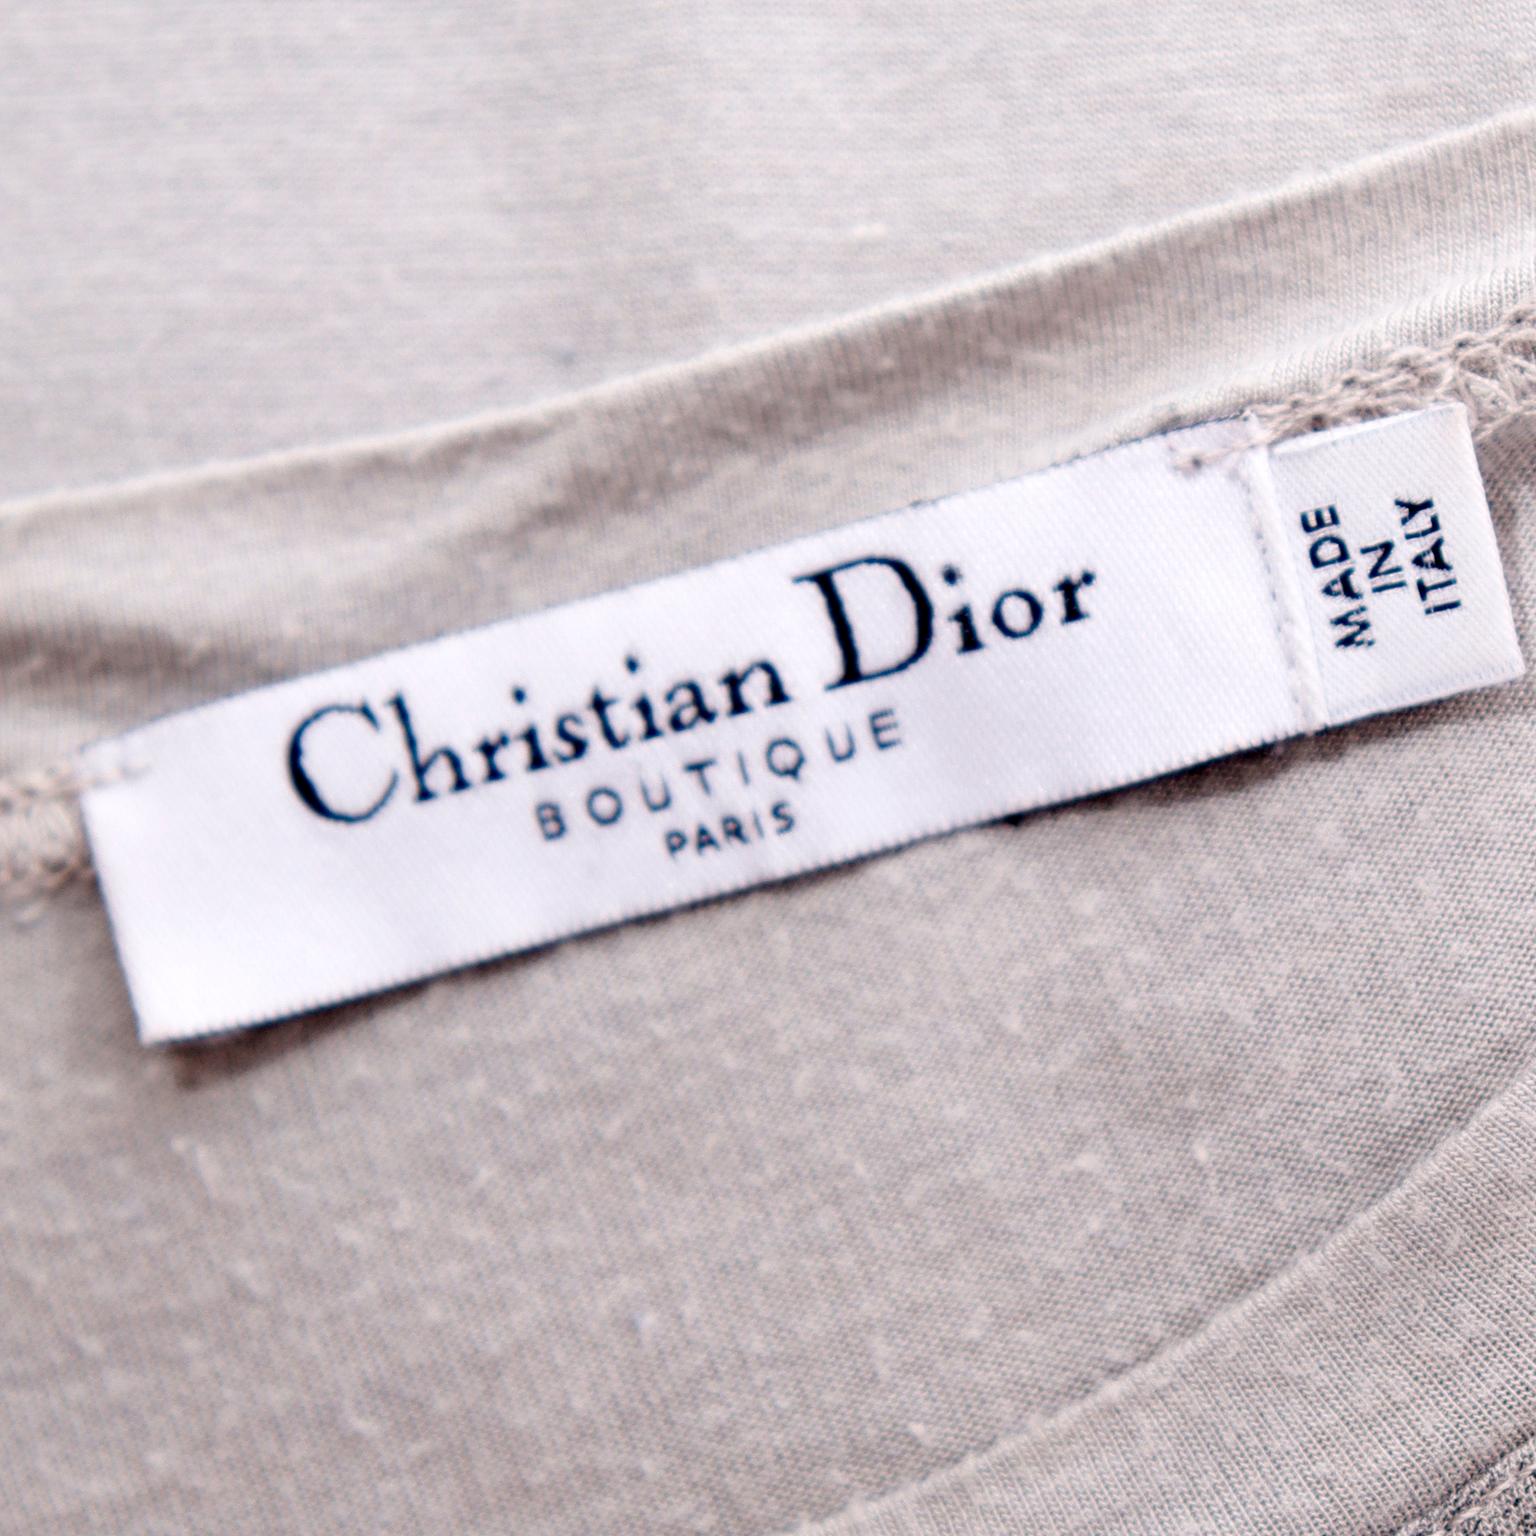 Christian Dior Boutique Paris Marie Antoinette Inspired Graphic T-Shirt 2000 1